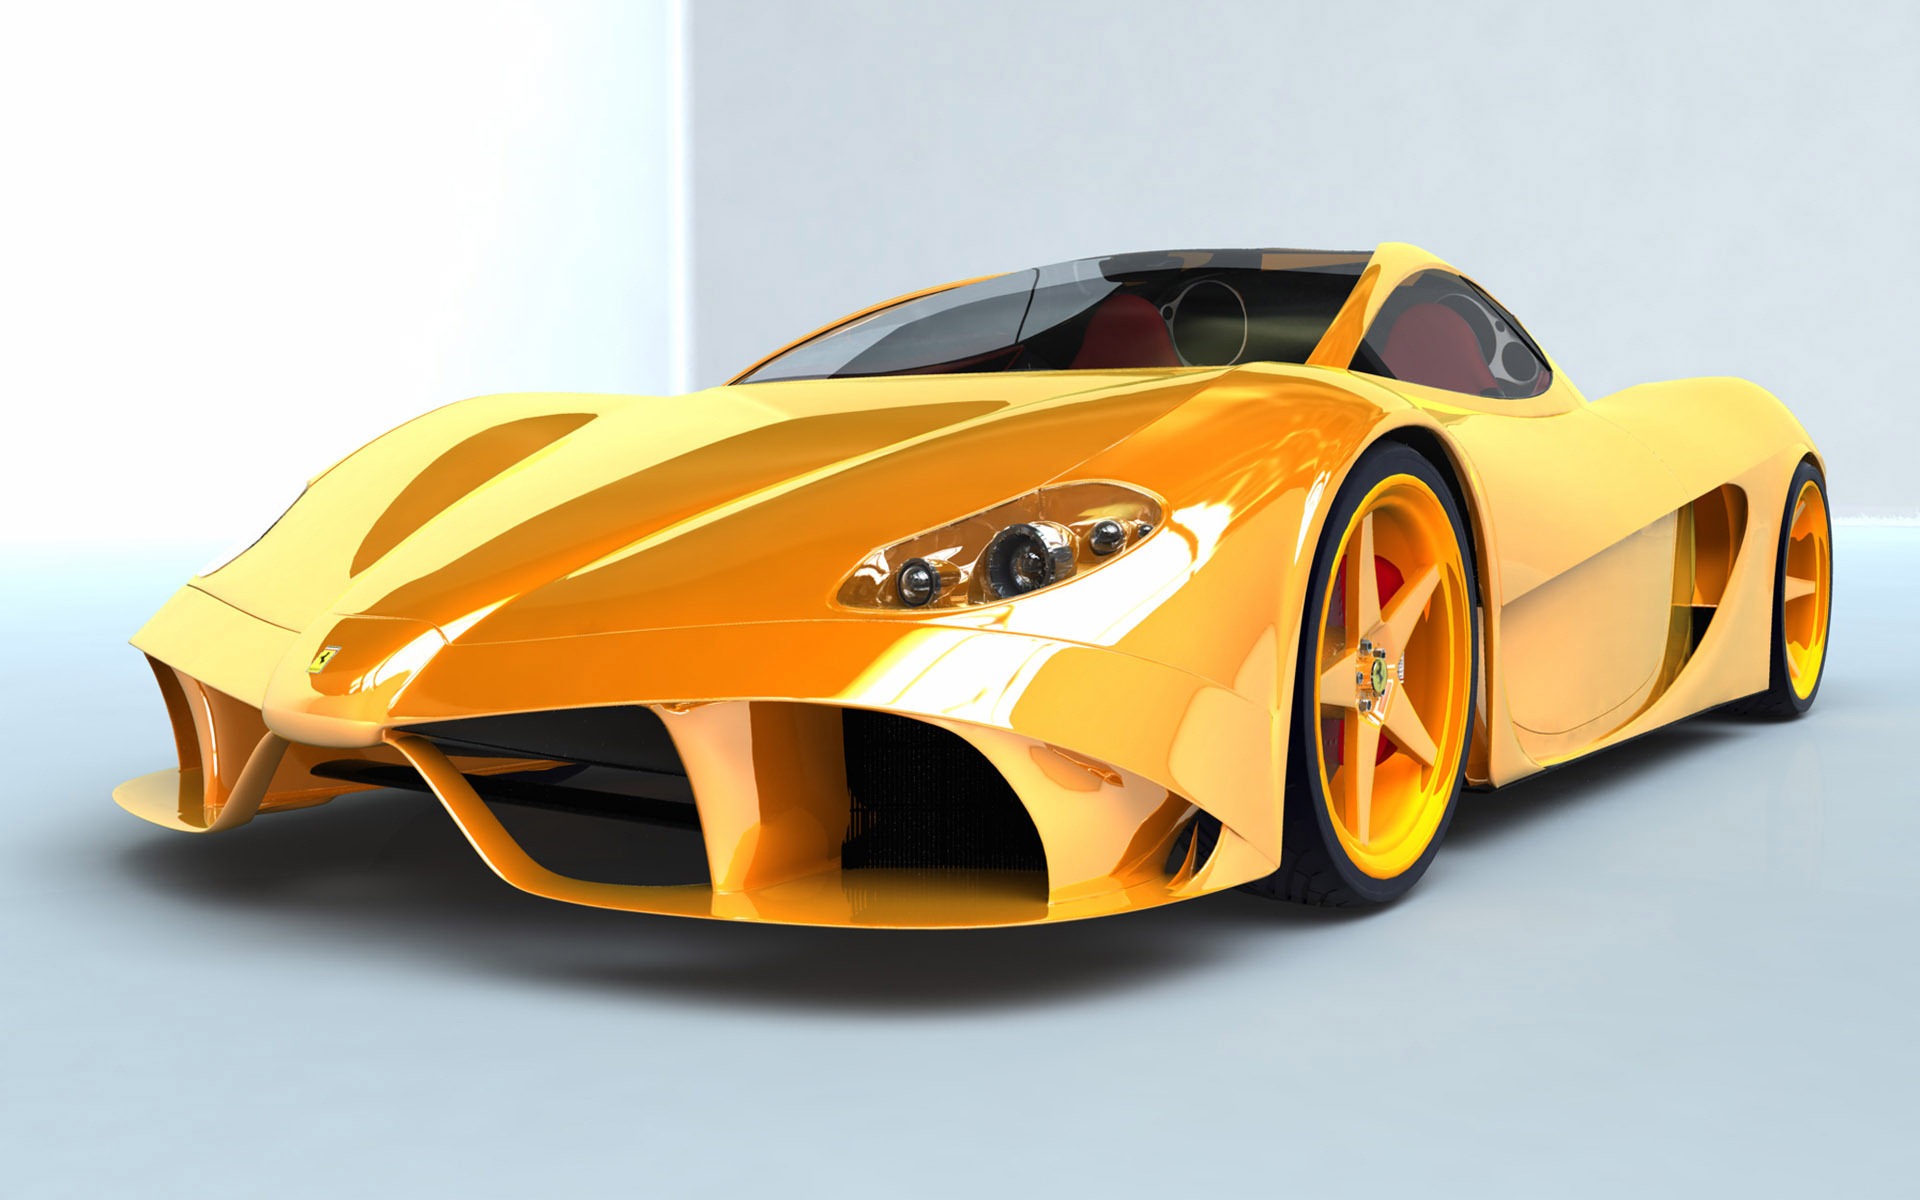 Beast car, a high-definition desktop wallpaper by Gauav - a sleek and powerful car.